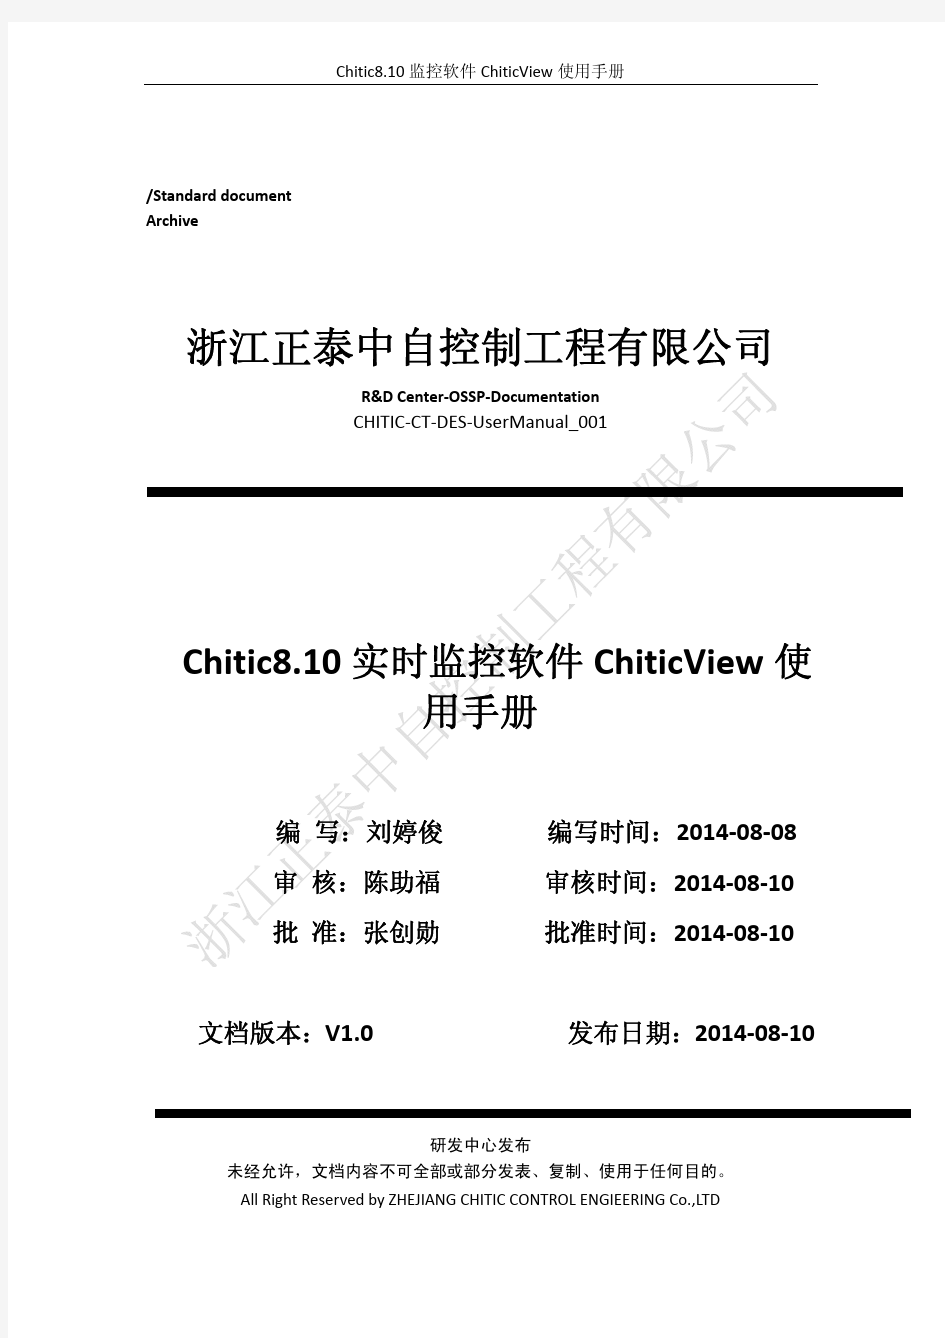 Chitic8.10监控软件ChiticView使用说明书_CHITIC-CT-UserManual_001_